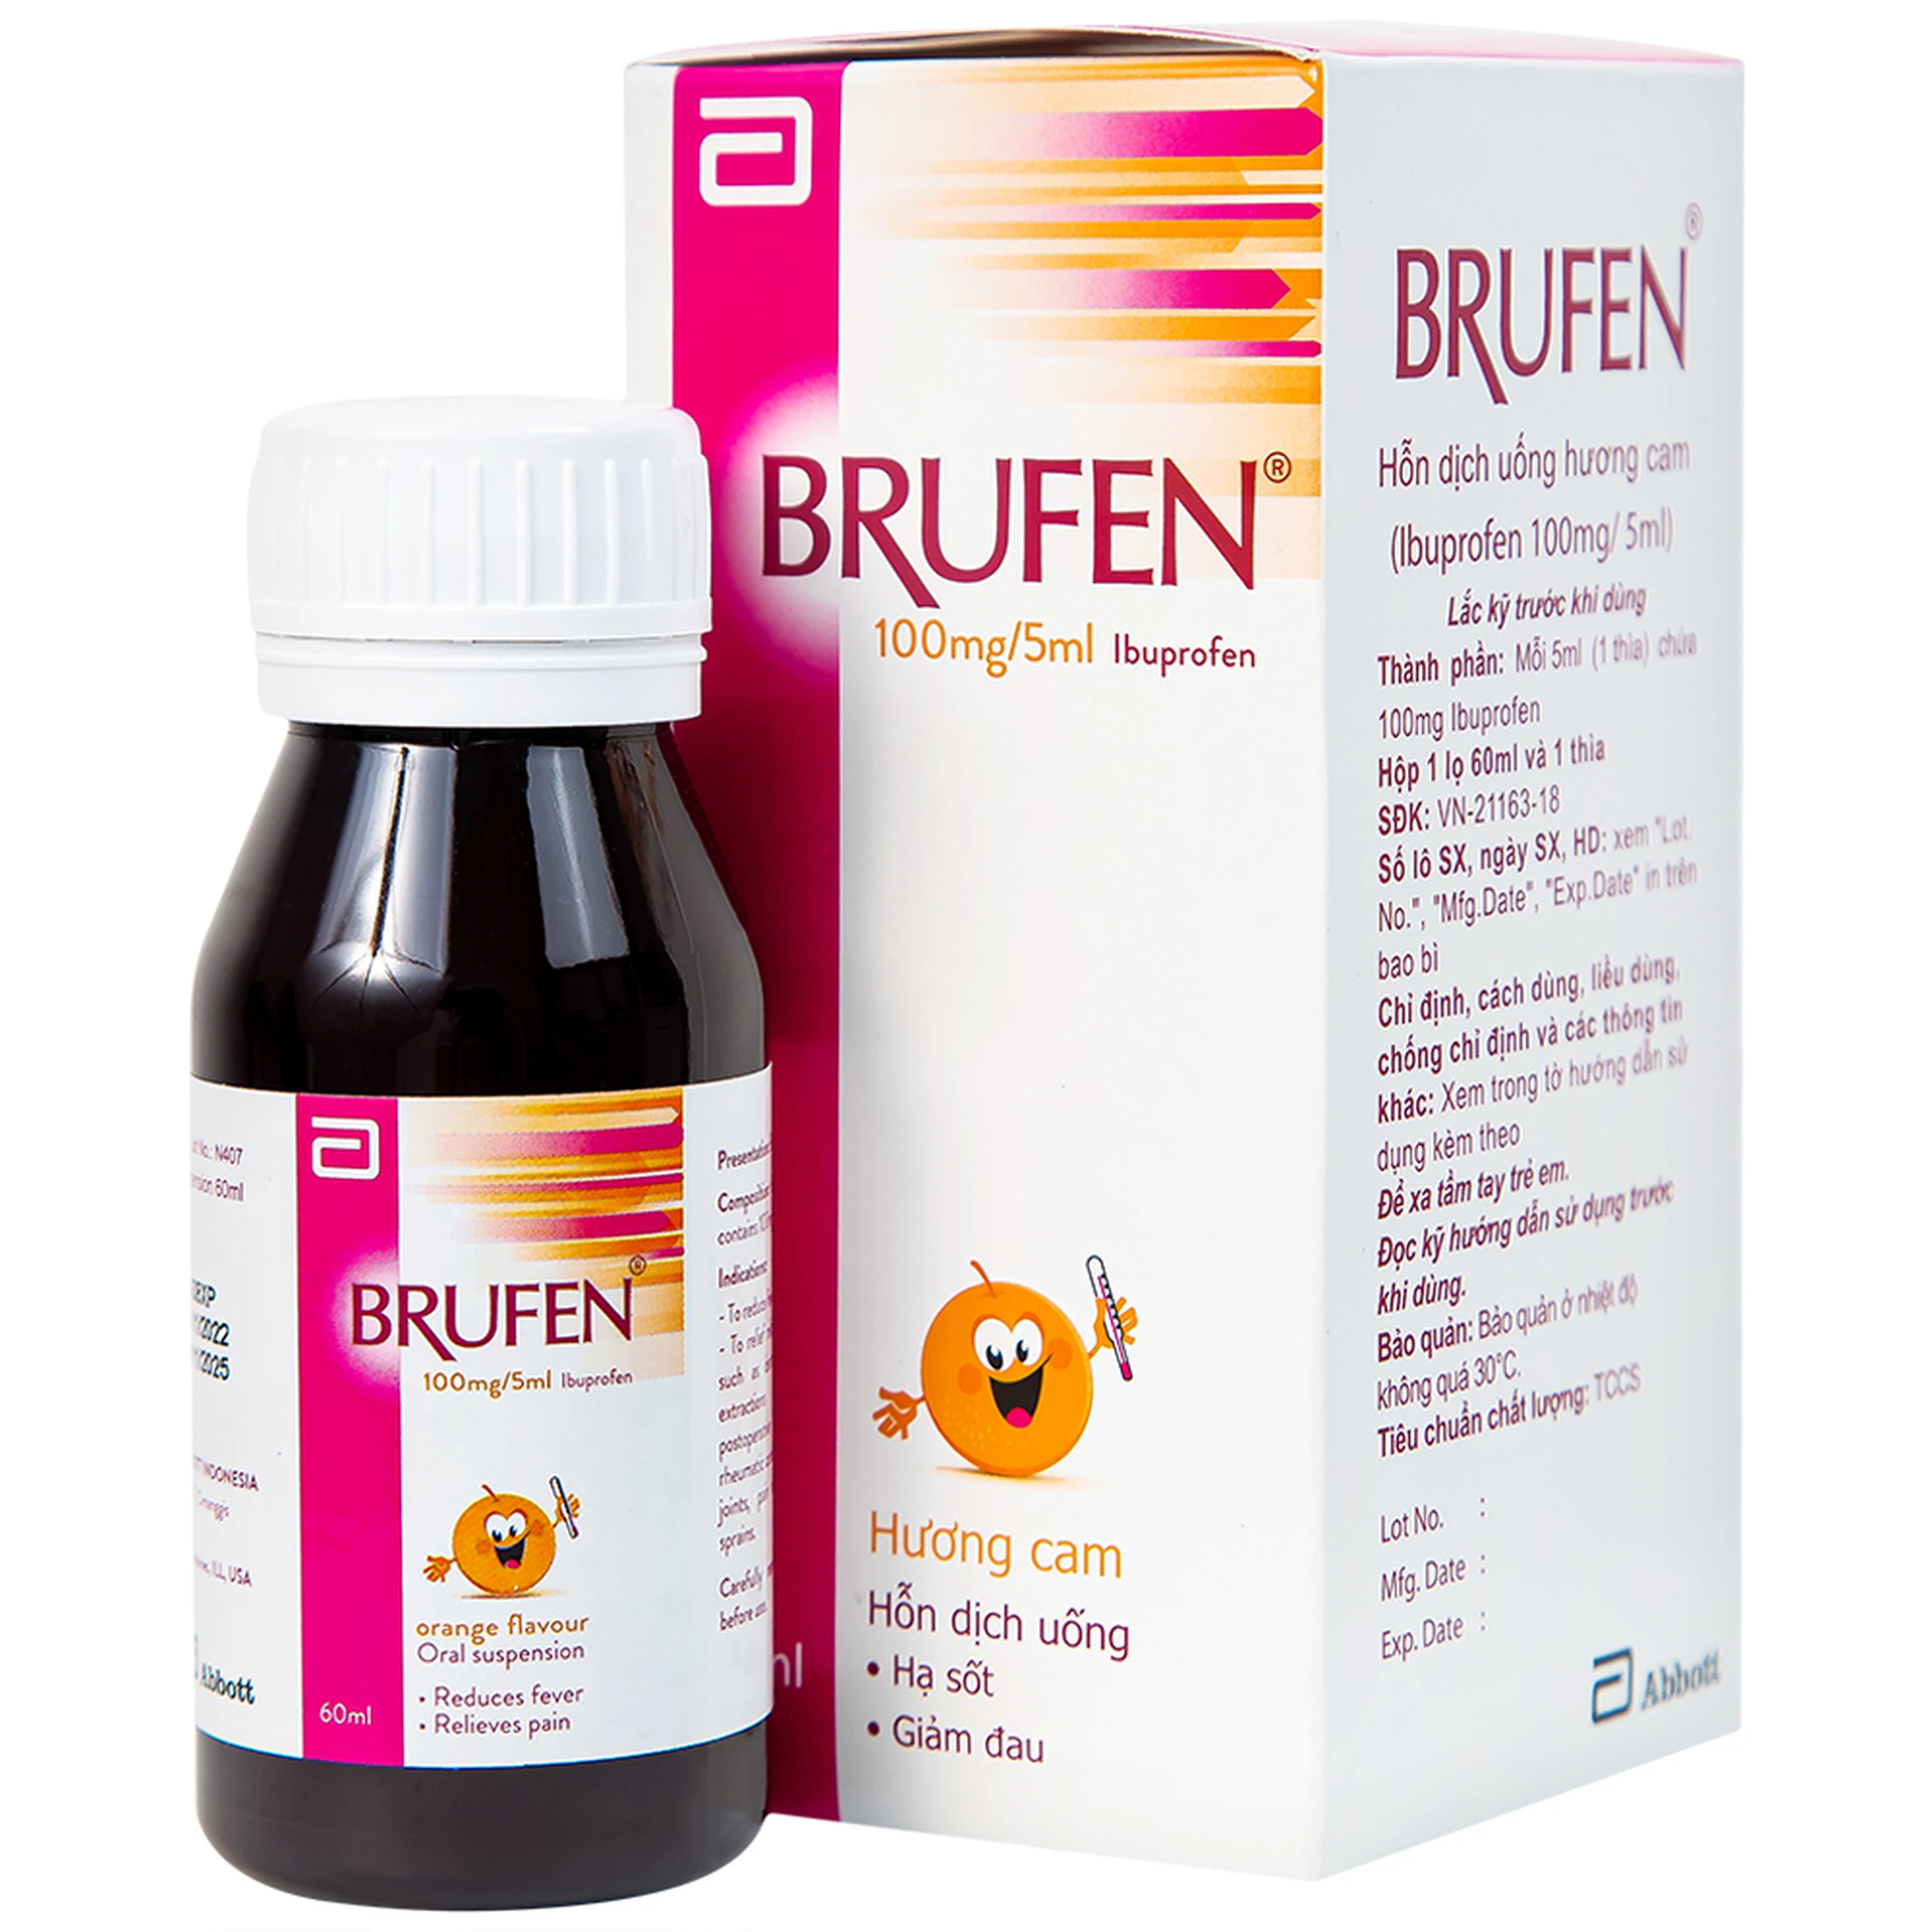 Hỗn dịch uống Brufen Abbott giảm đau, hạ sốt ở trẻ em (60ml)